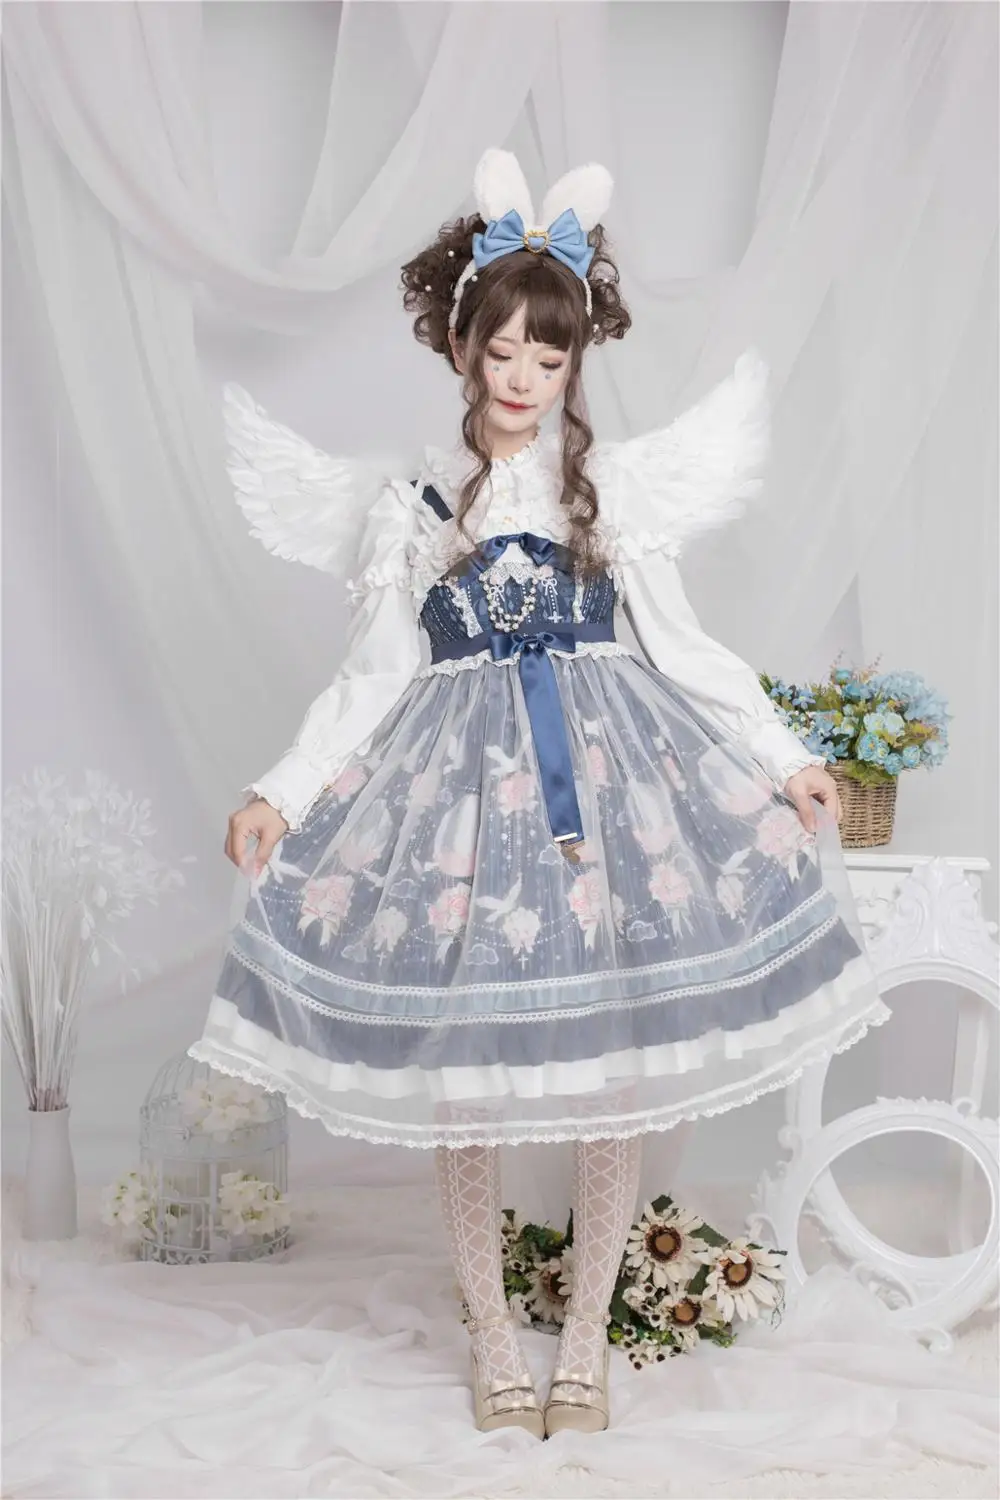 

Palace sweet princess lolita strap dress vintage falbala high waist printing victorian dress kawaii girl gothic lolita cos loli